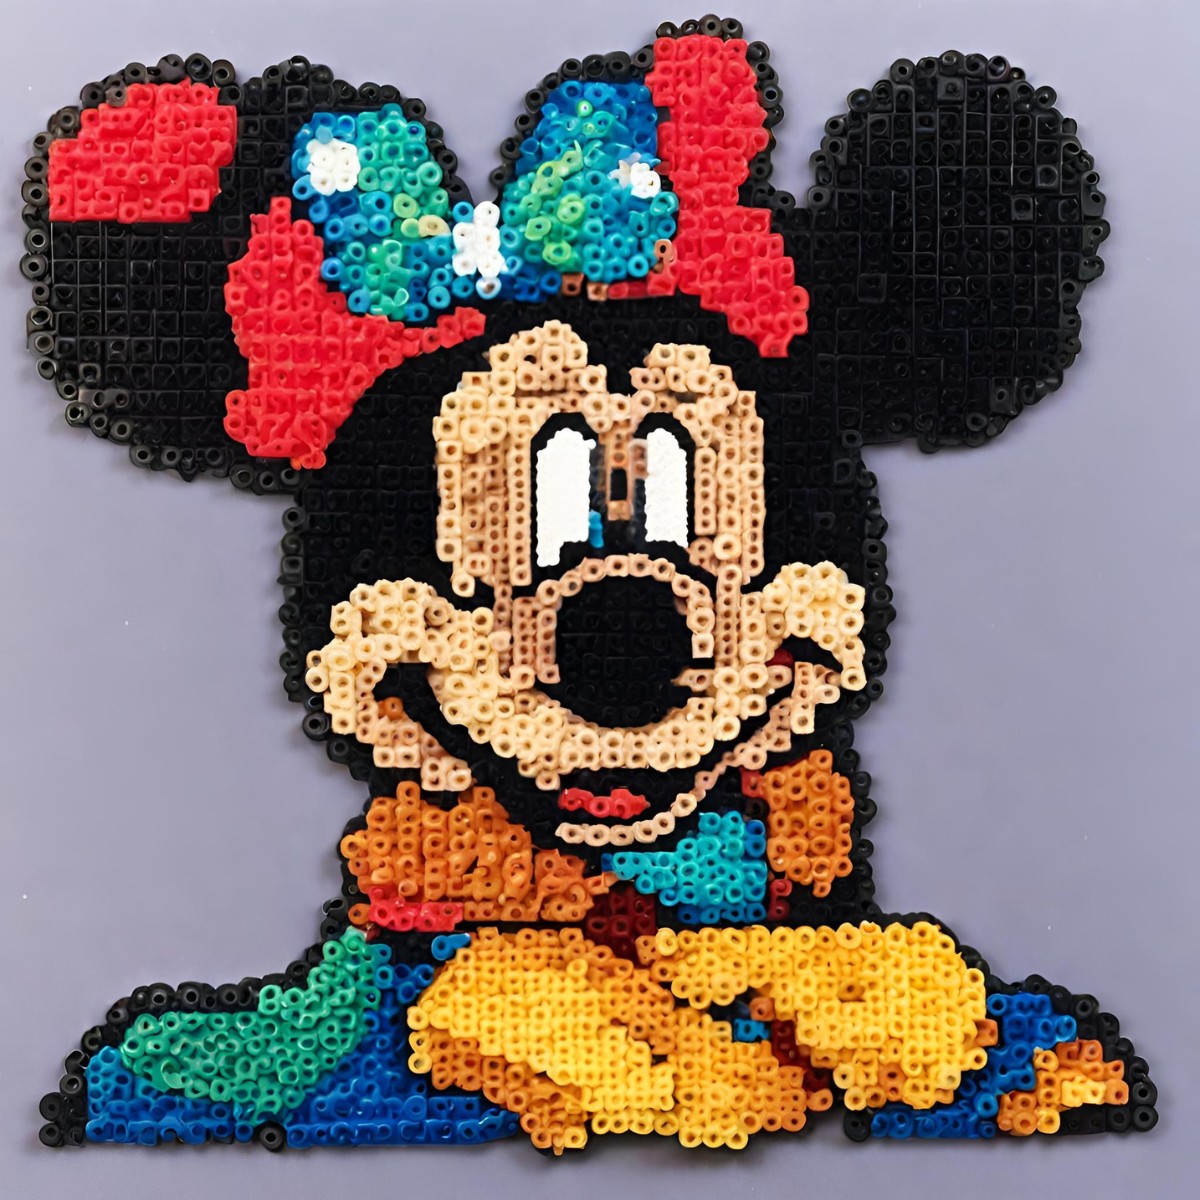 11 Disney Perler Bead Ideas In Various Characters - DIY Crafts